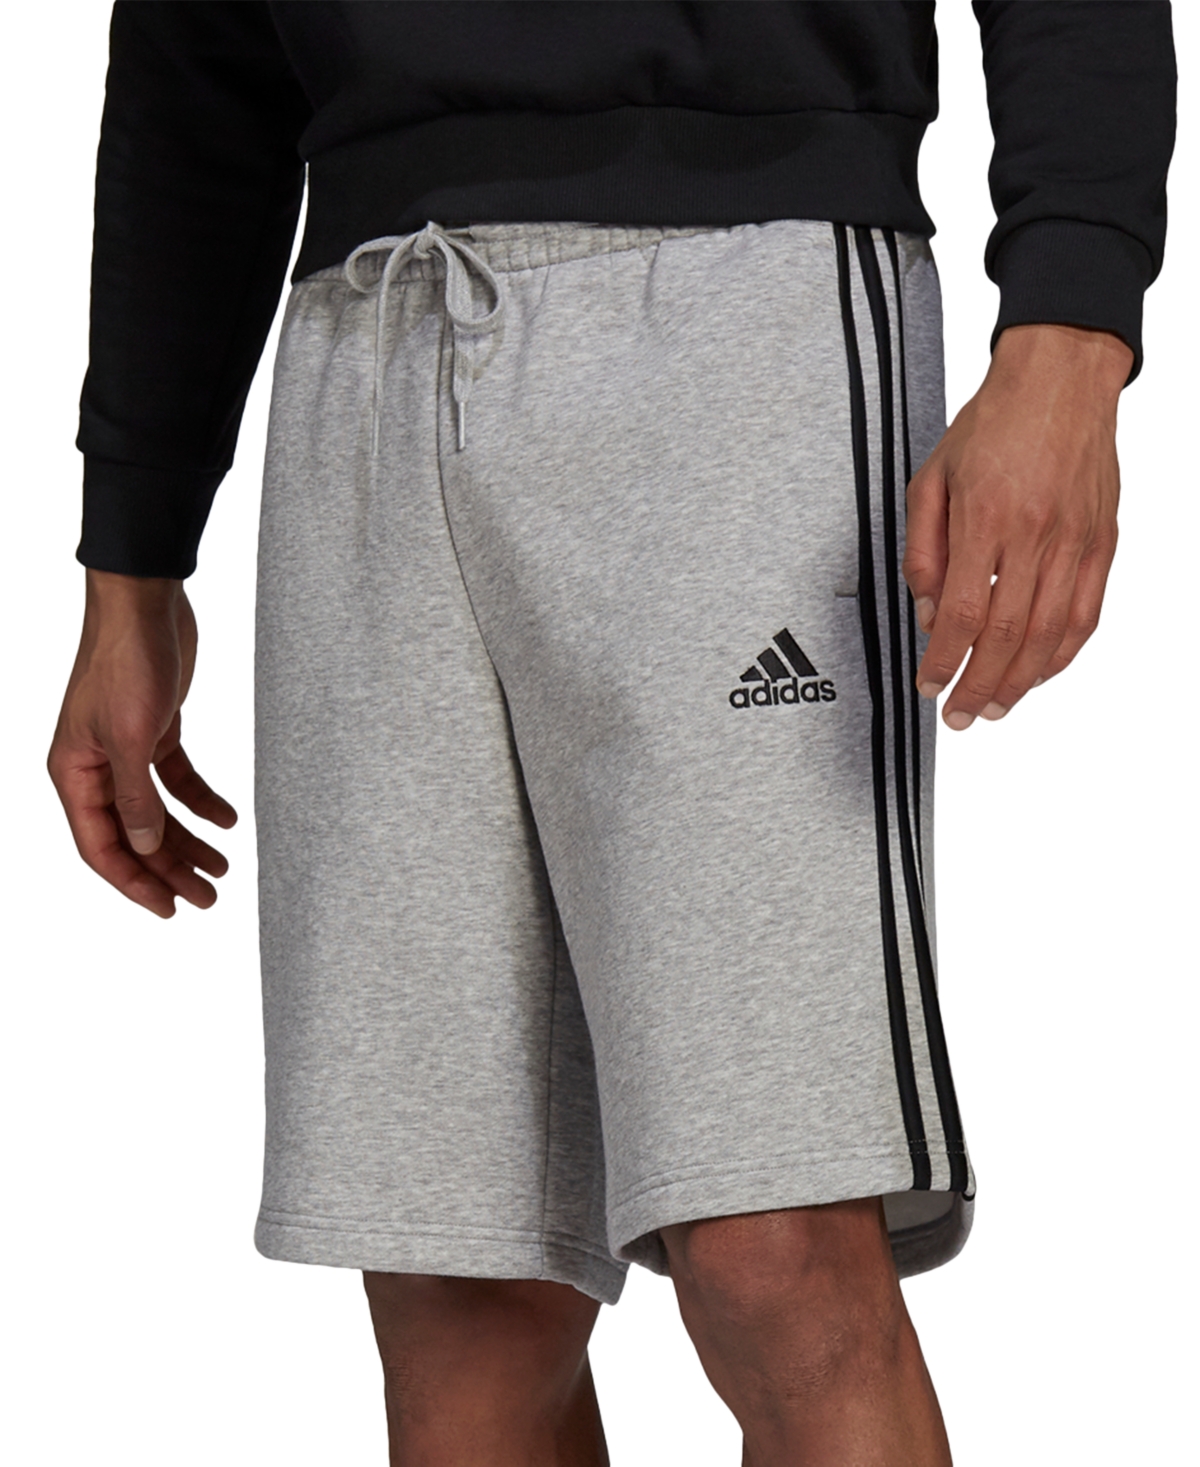 Adidas Originals Men's 3-stripes 10" Fleece Shorts In Medium Grey Heather,black